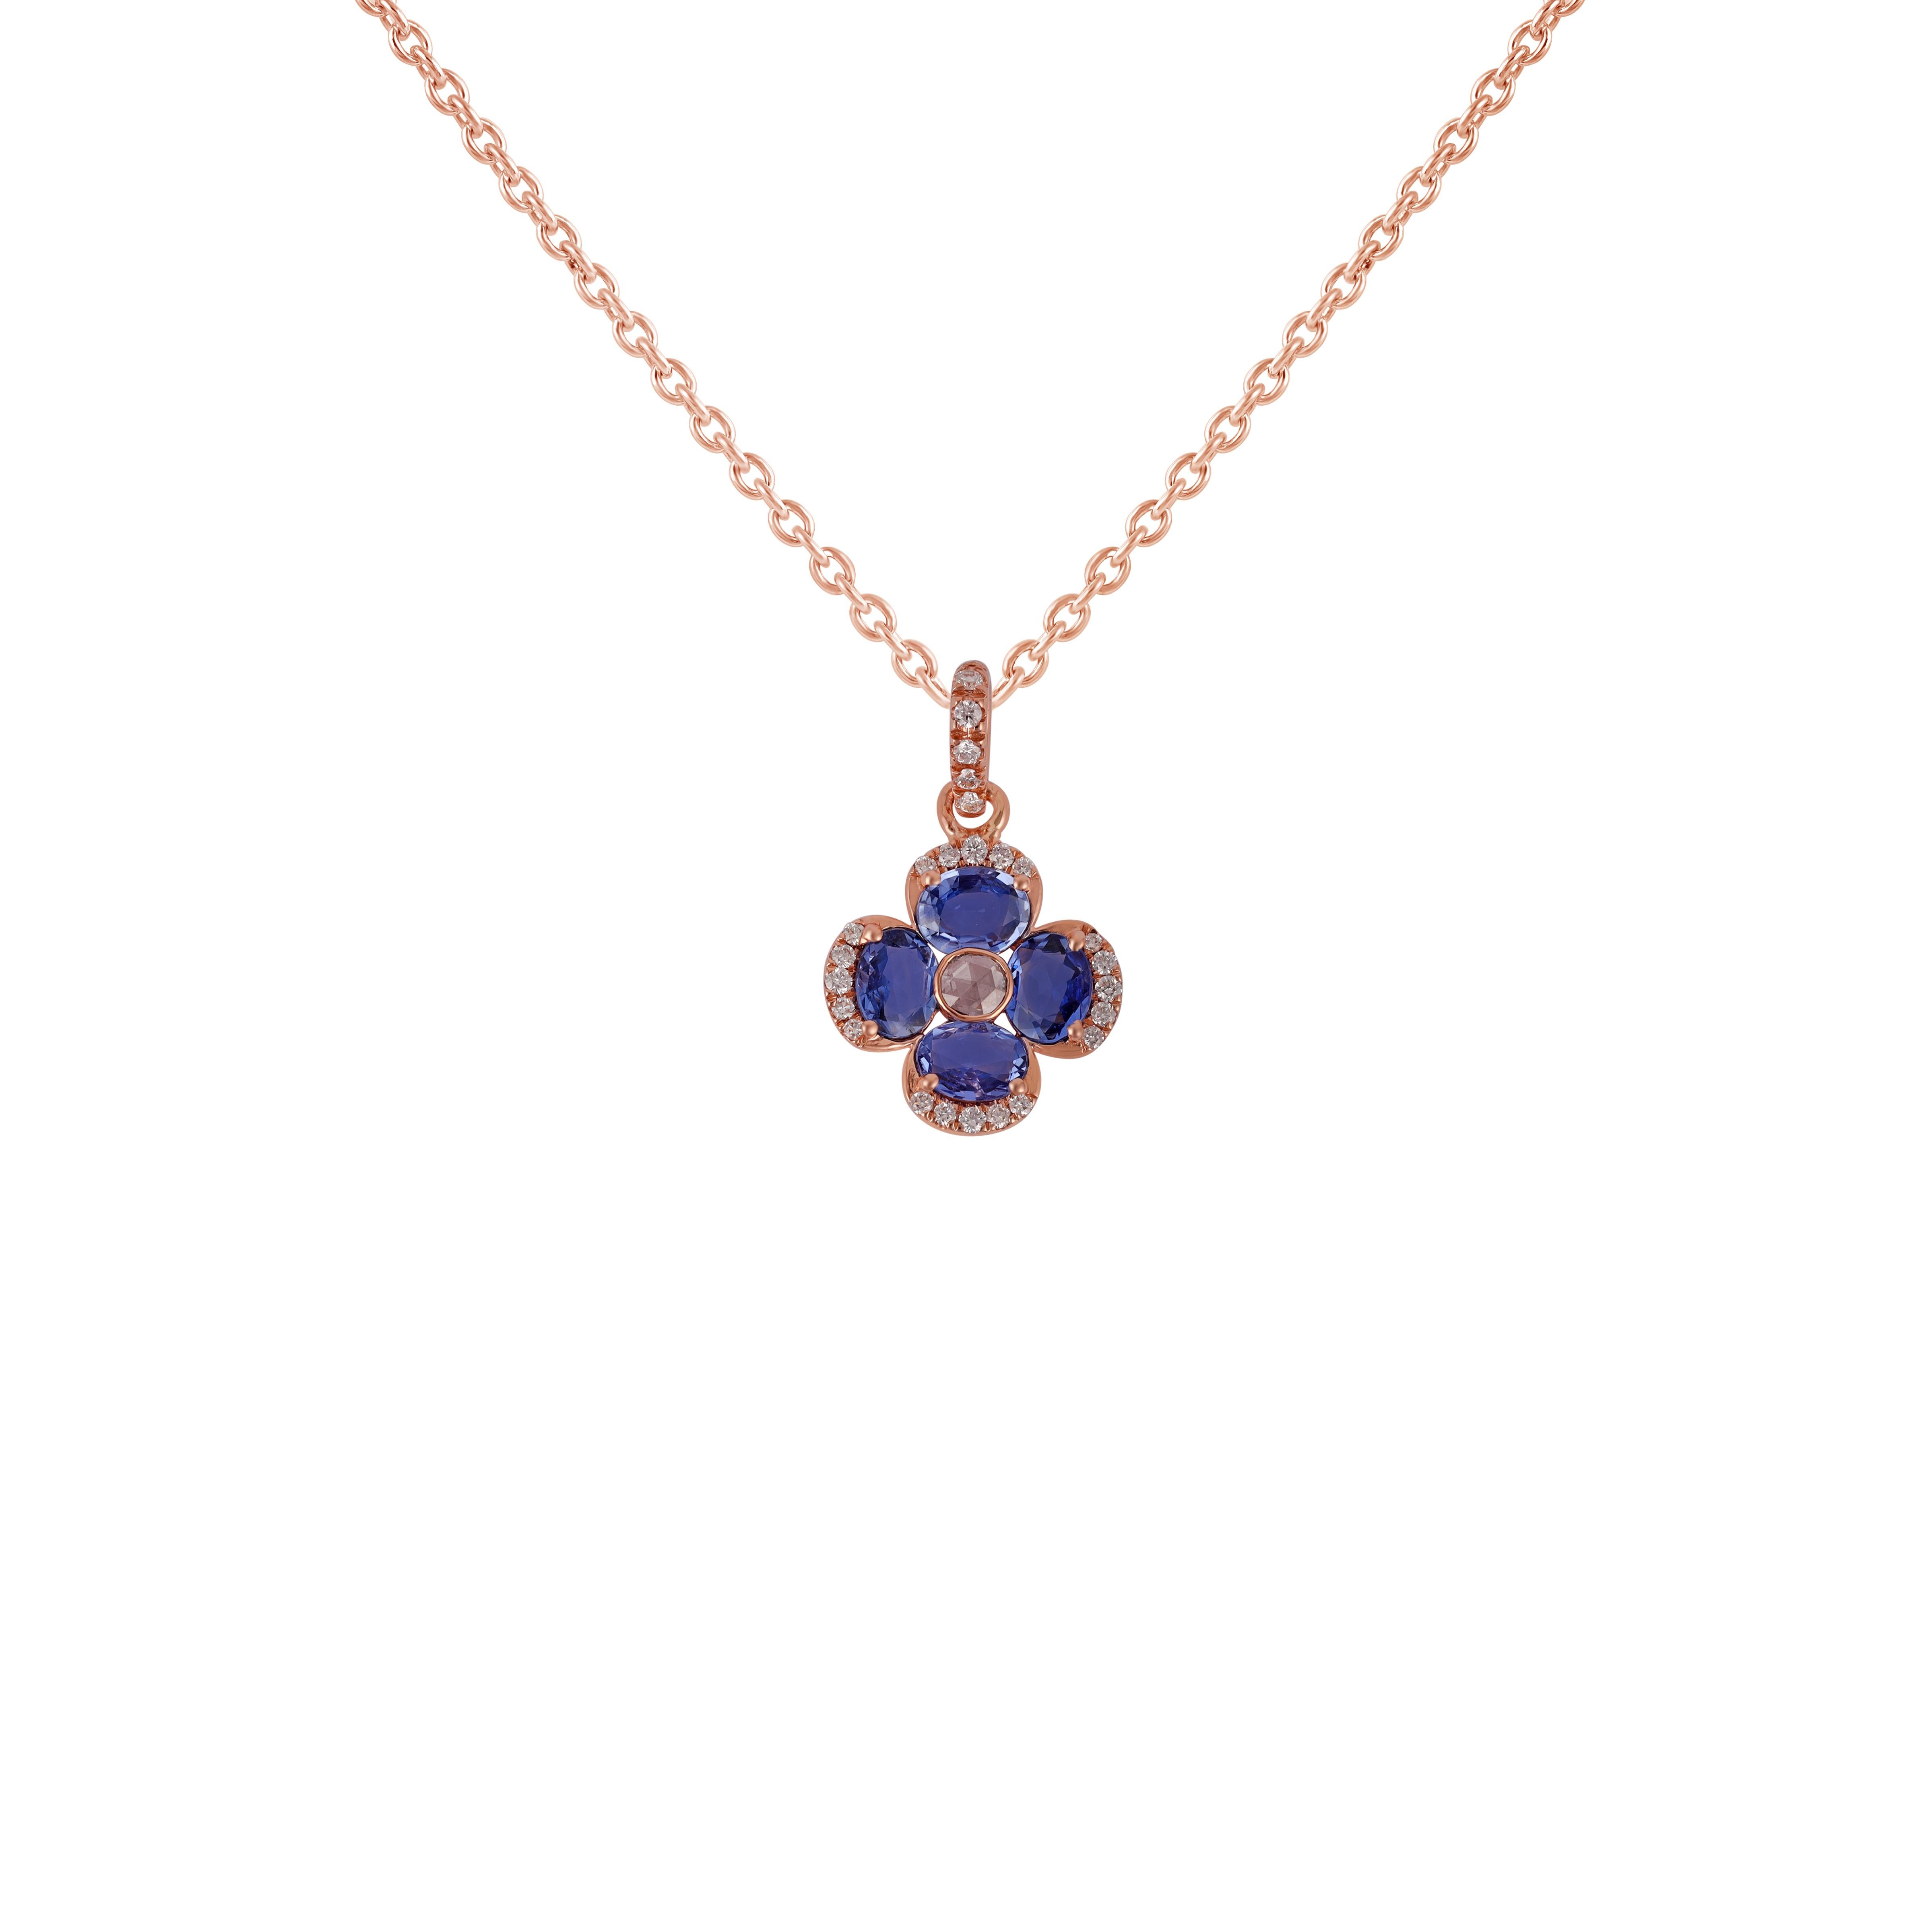 Modern 1.51 Carat Oval Cut Blue Sapphire Pendant Necklace in 18 Karat Gold with Diamond For Sale